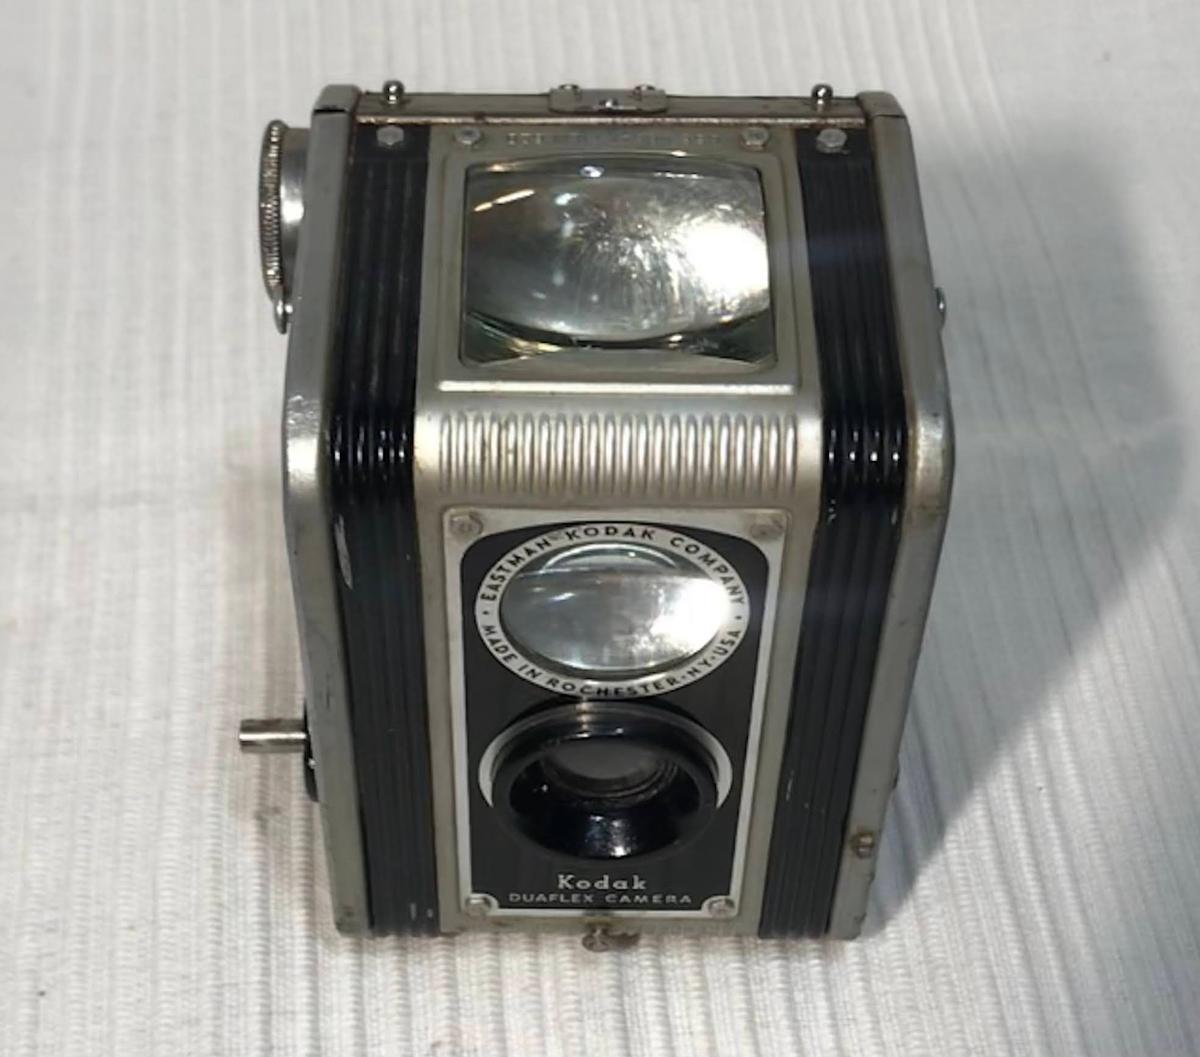 A Kodak Duaflex camera from the collection. (Courtesy of Fridrik)